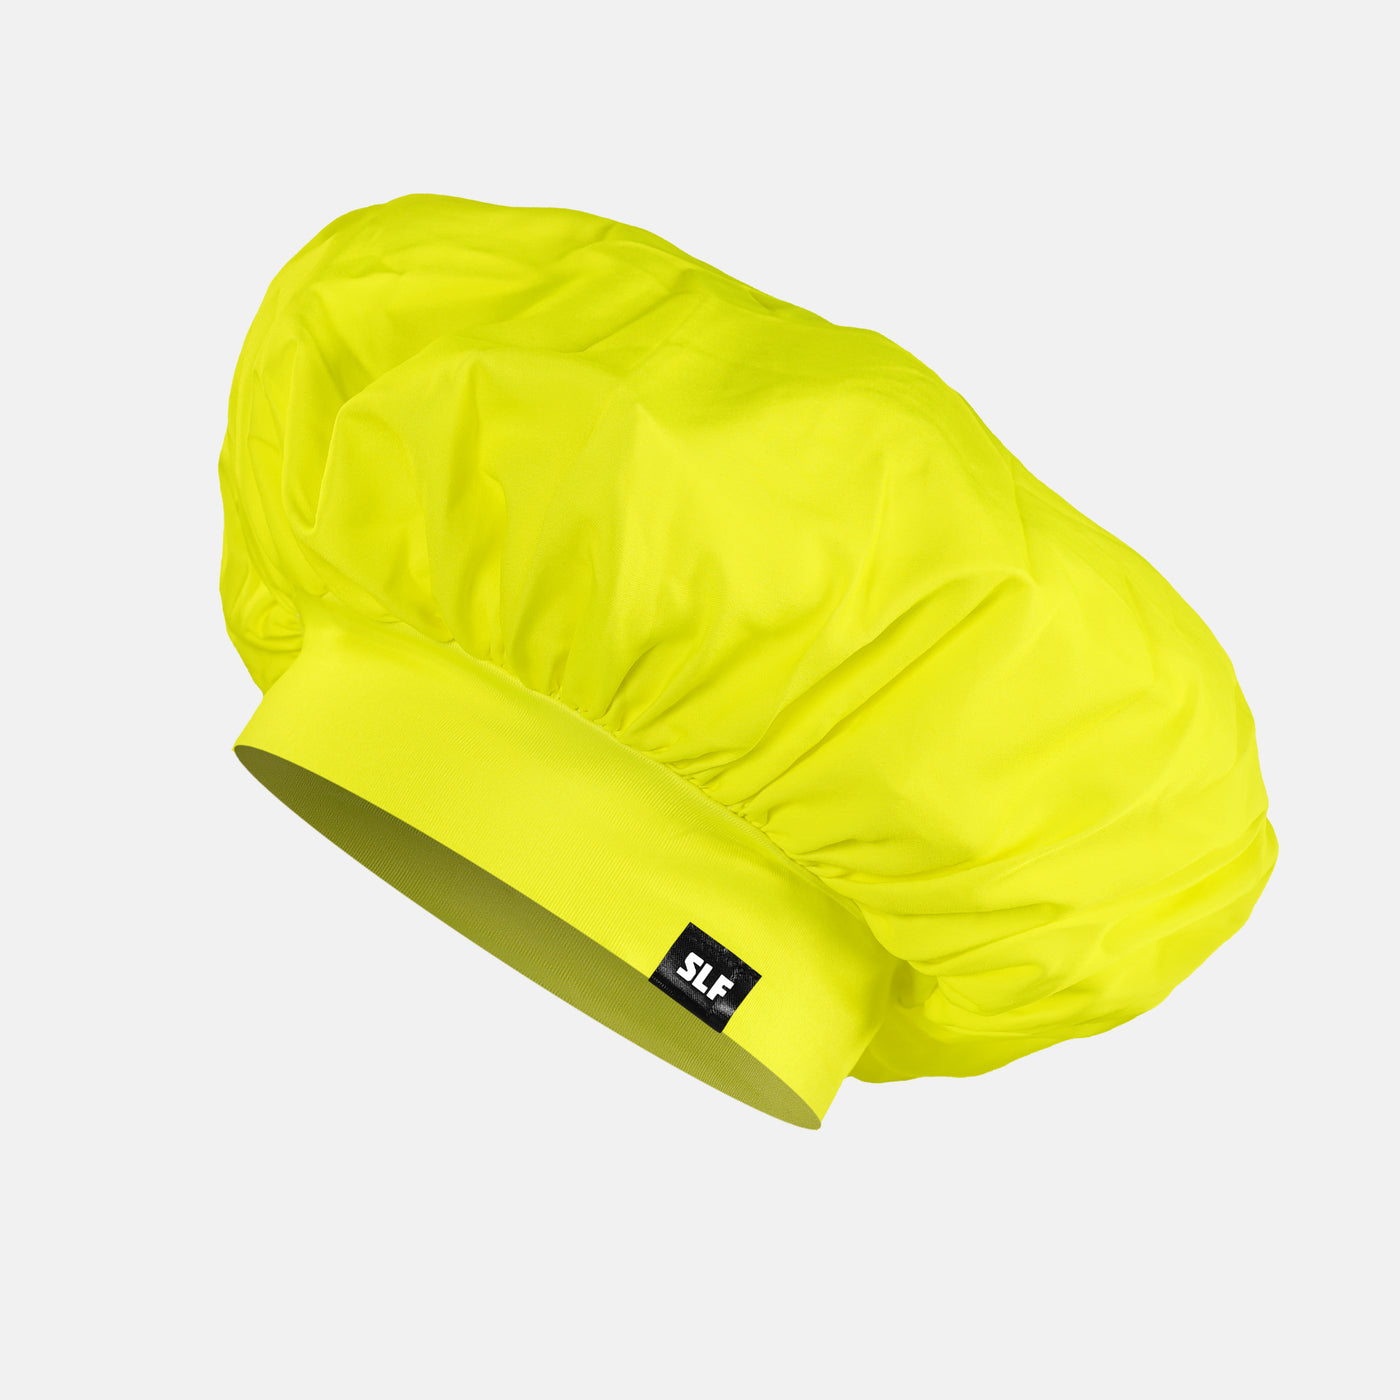 Safety Yellow Bonnet